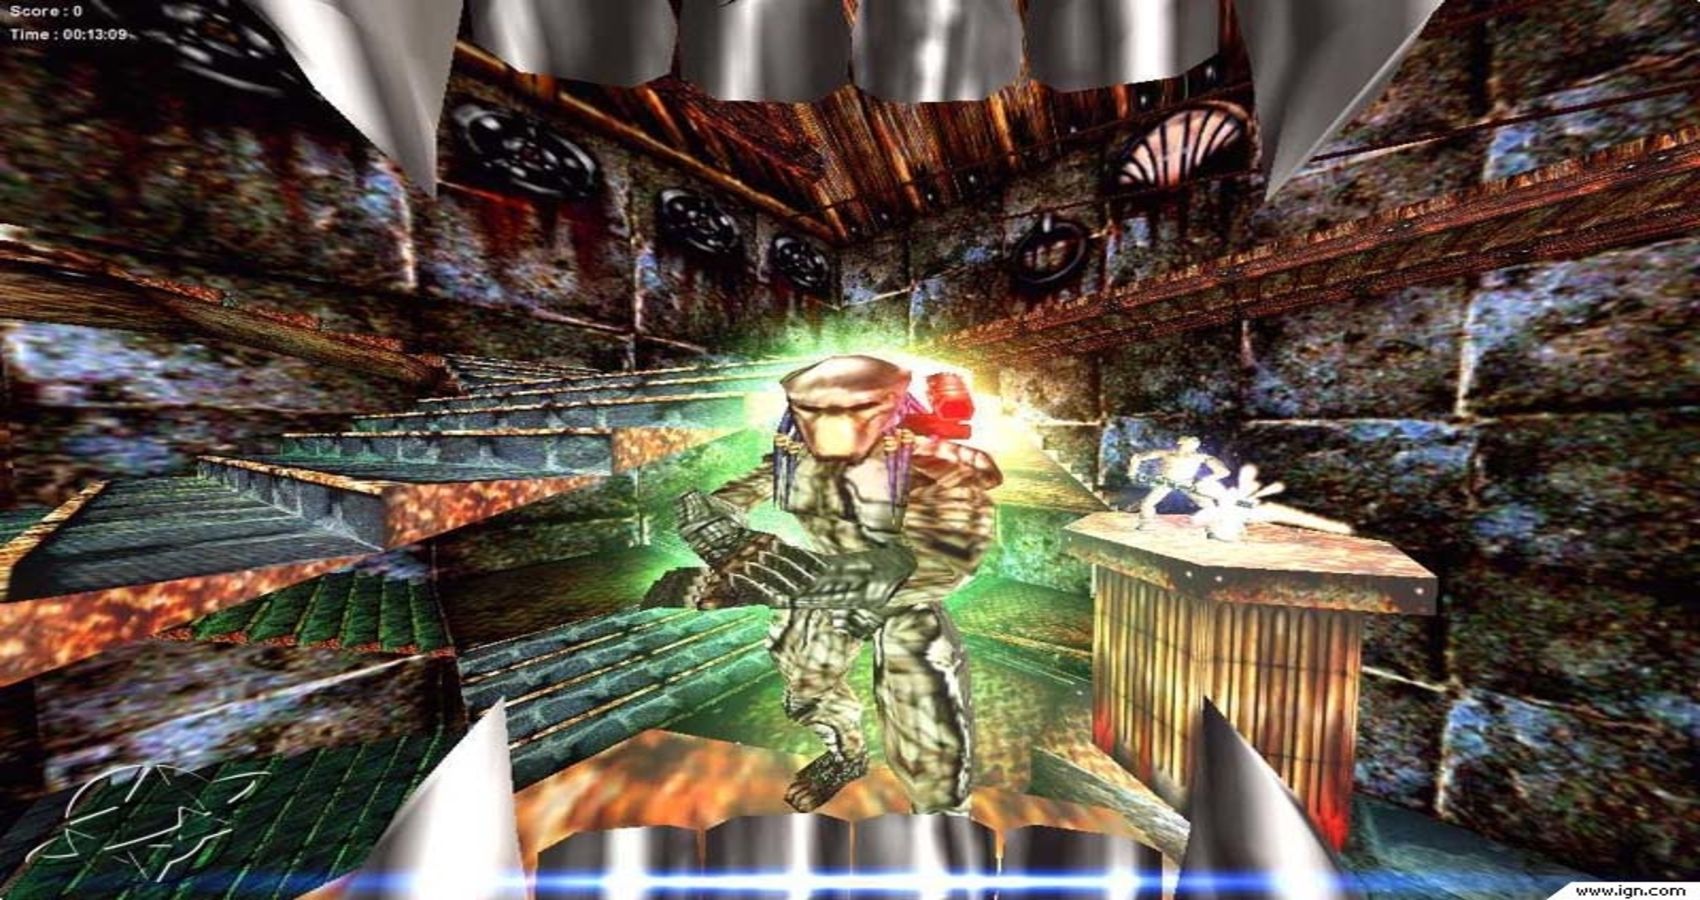 A Xenomorph player facing down a Yautja in Alien Versus Predator 1999